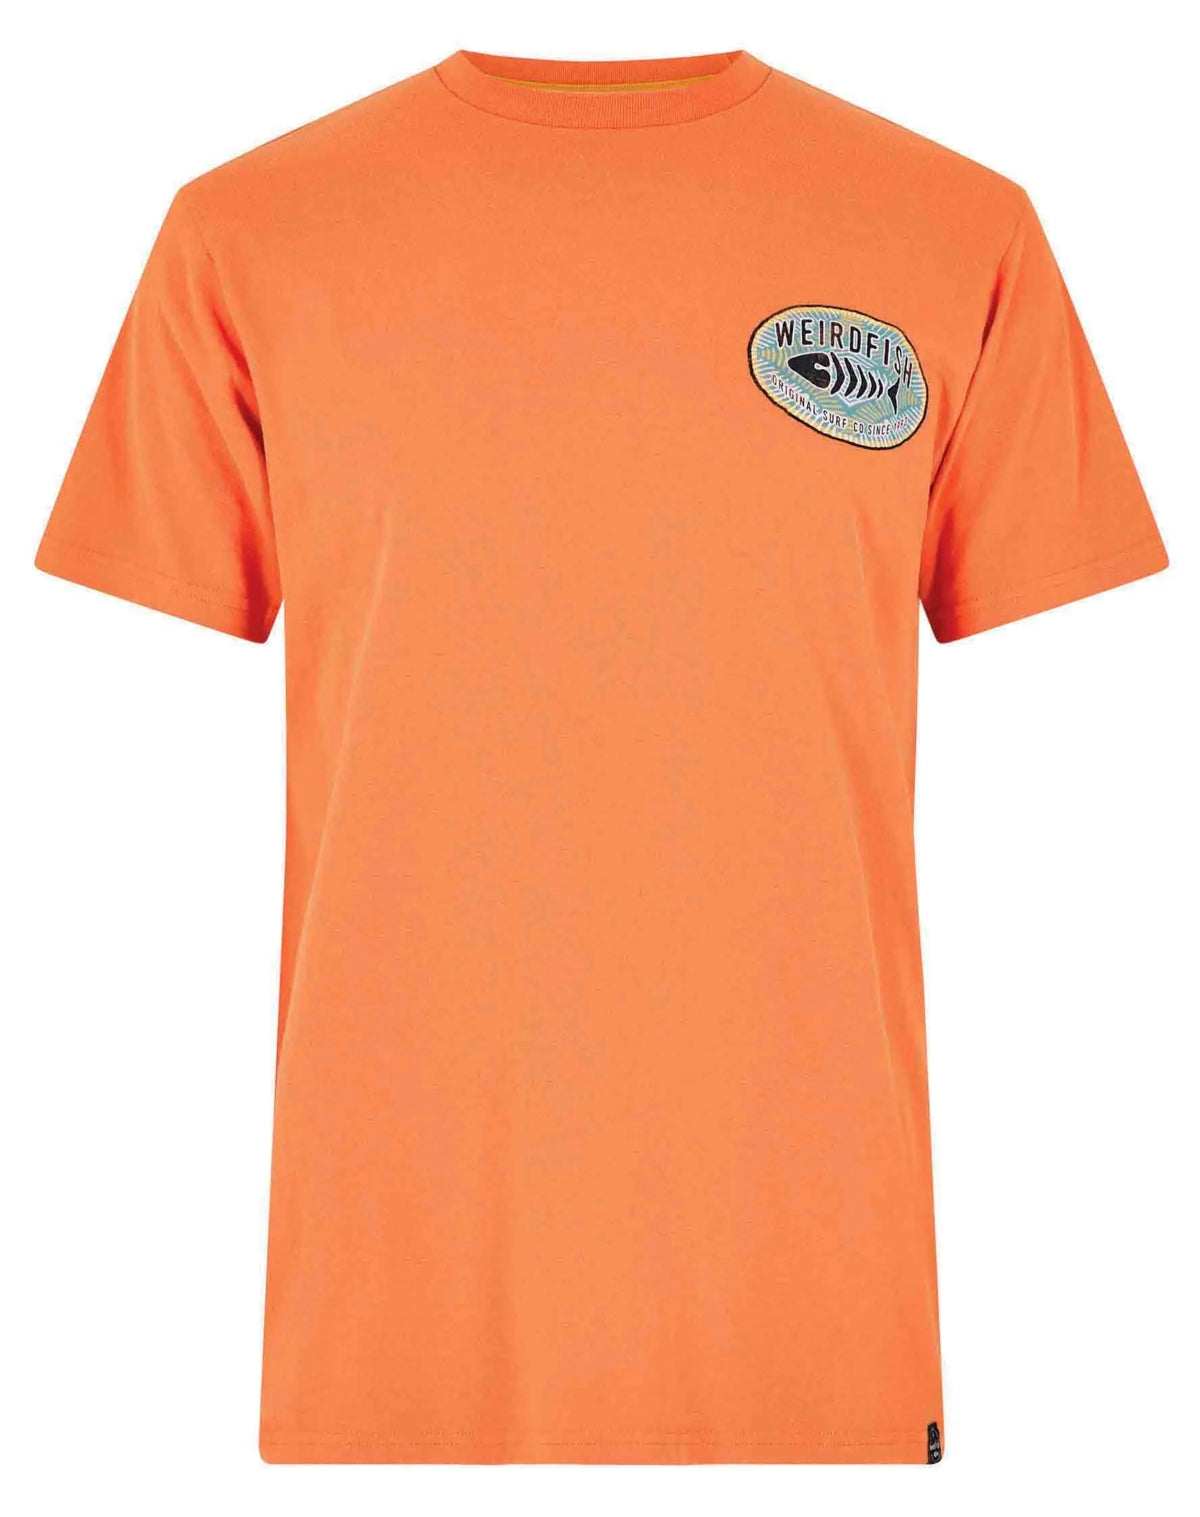 Mango orange crew neck Original surf print t-shirt for men from Weird Fish.